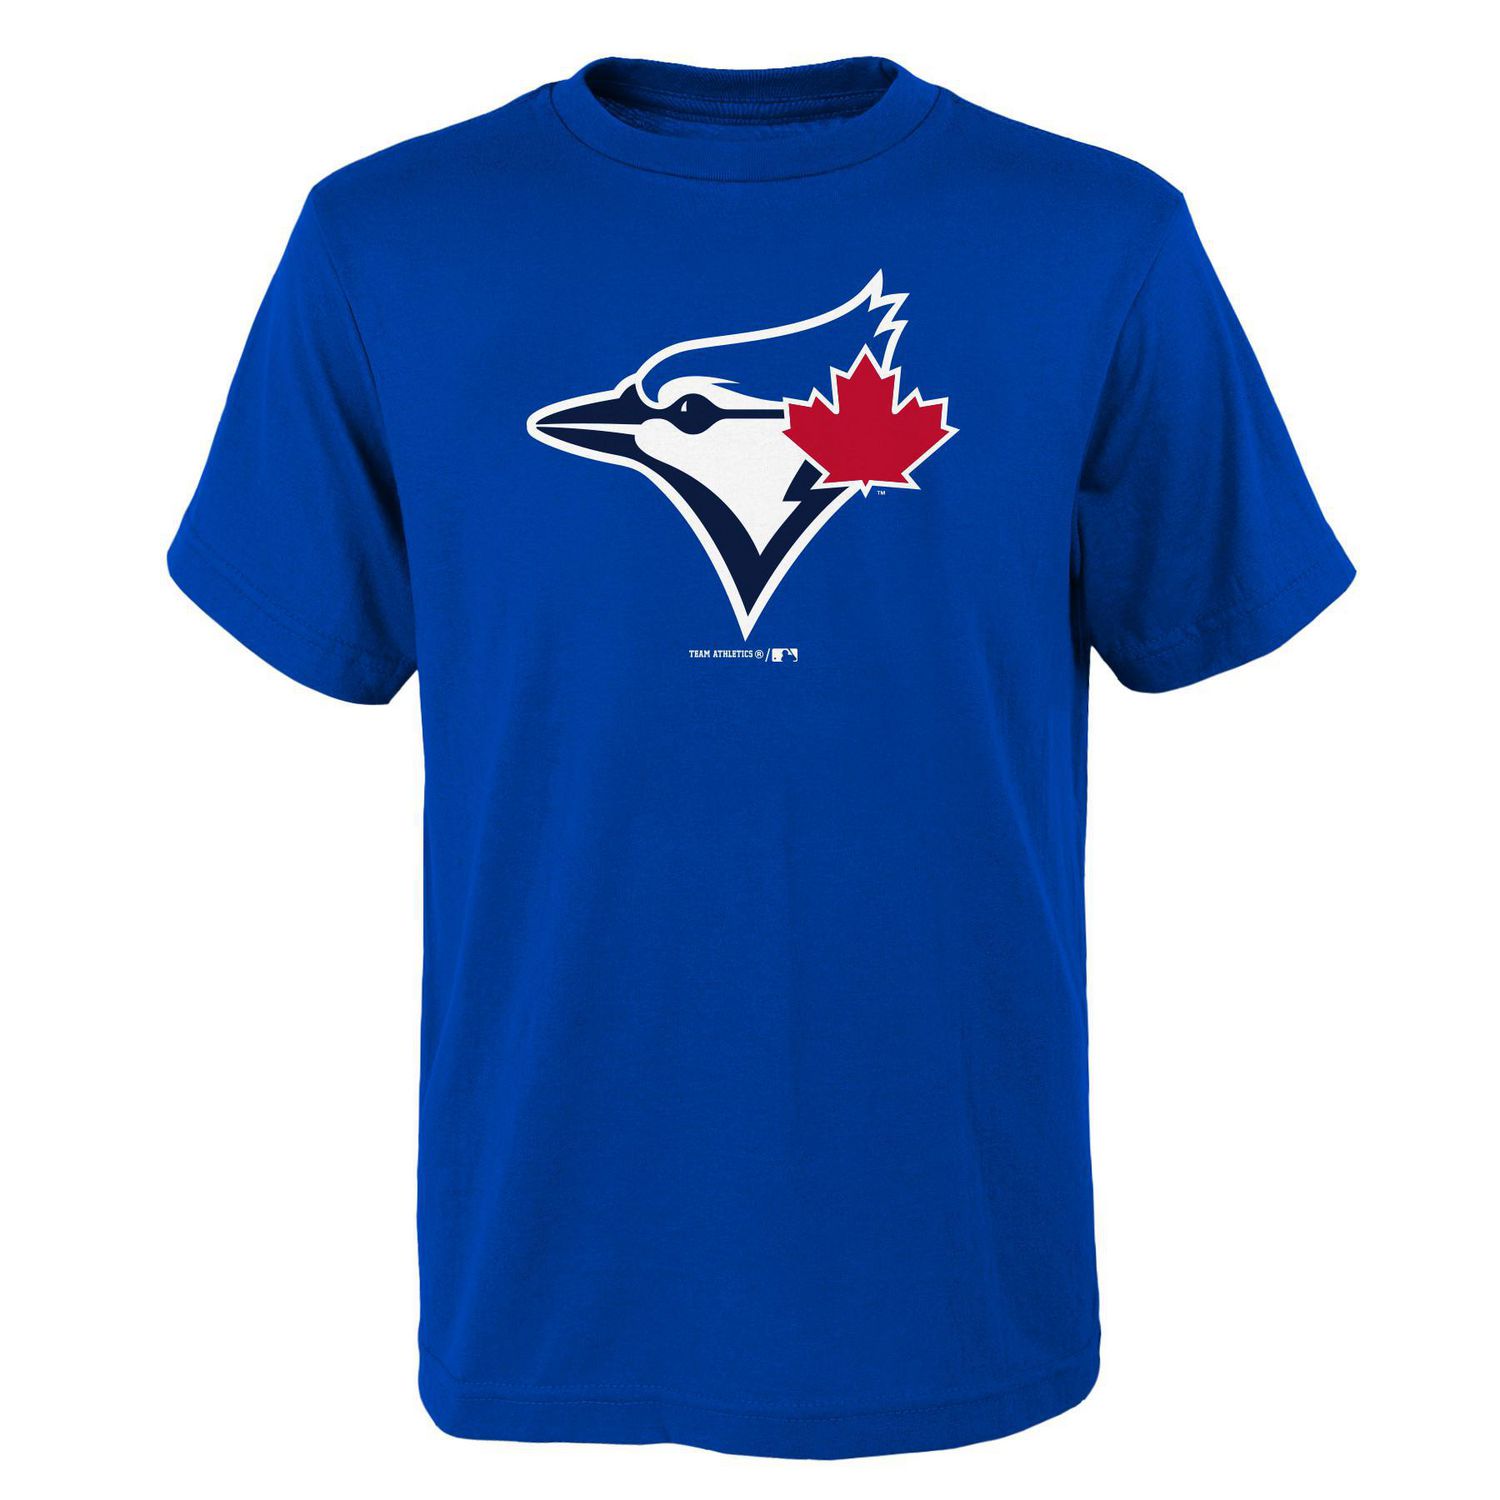 Boys Short Sleeve Shirt, Blue Jays | Walmart Canada